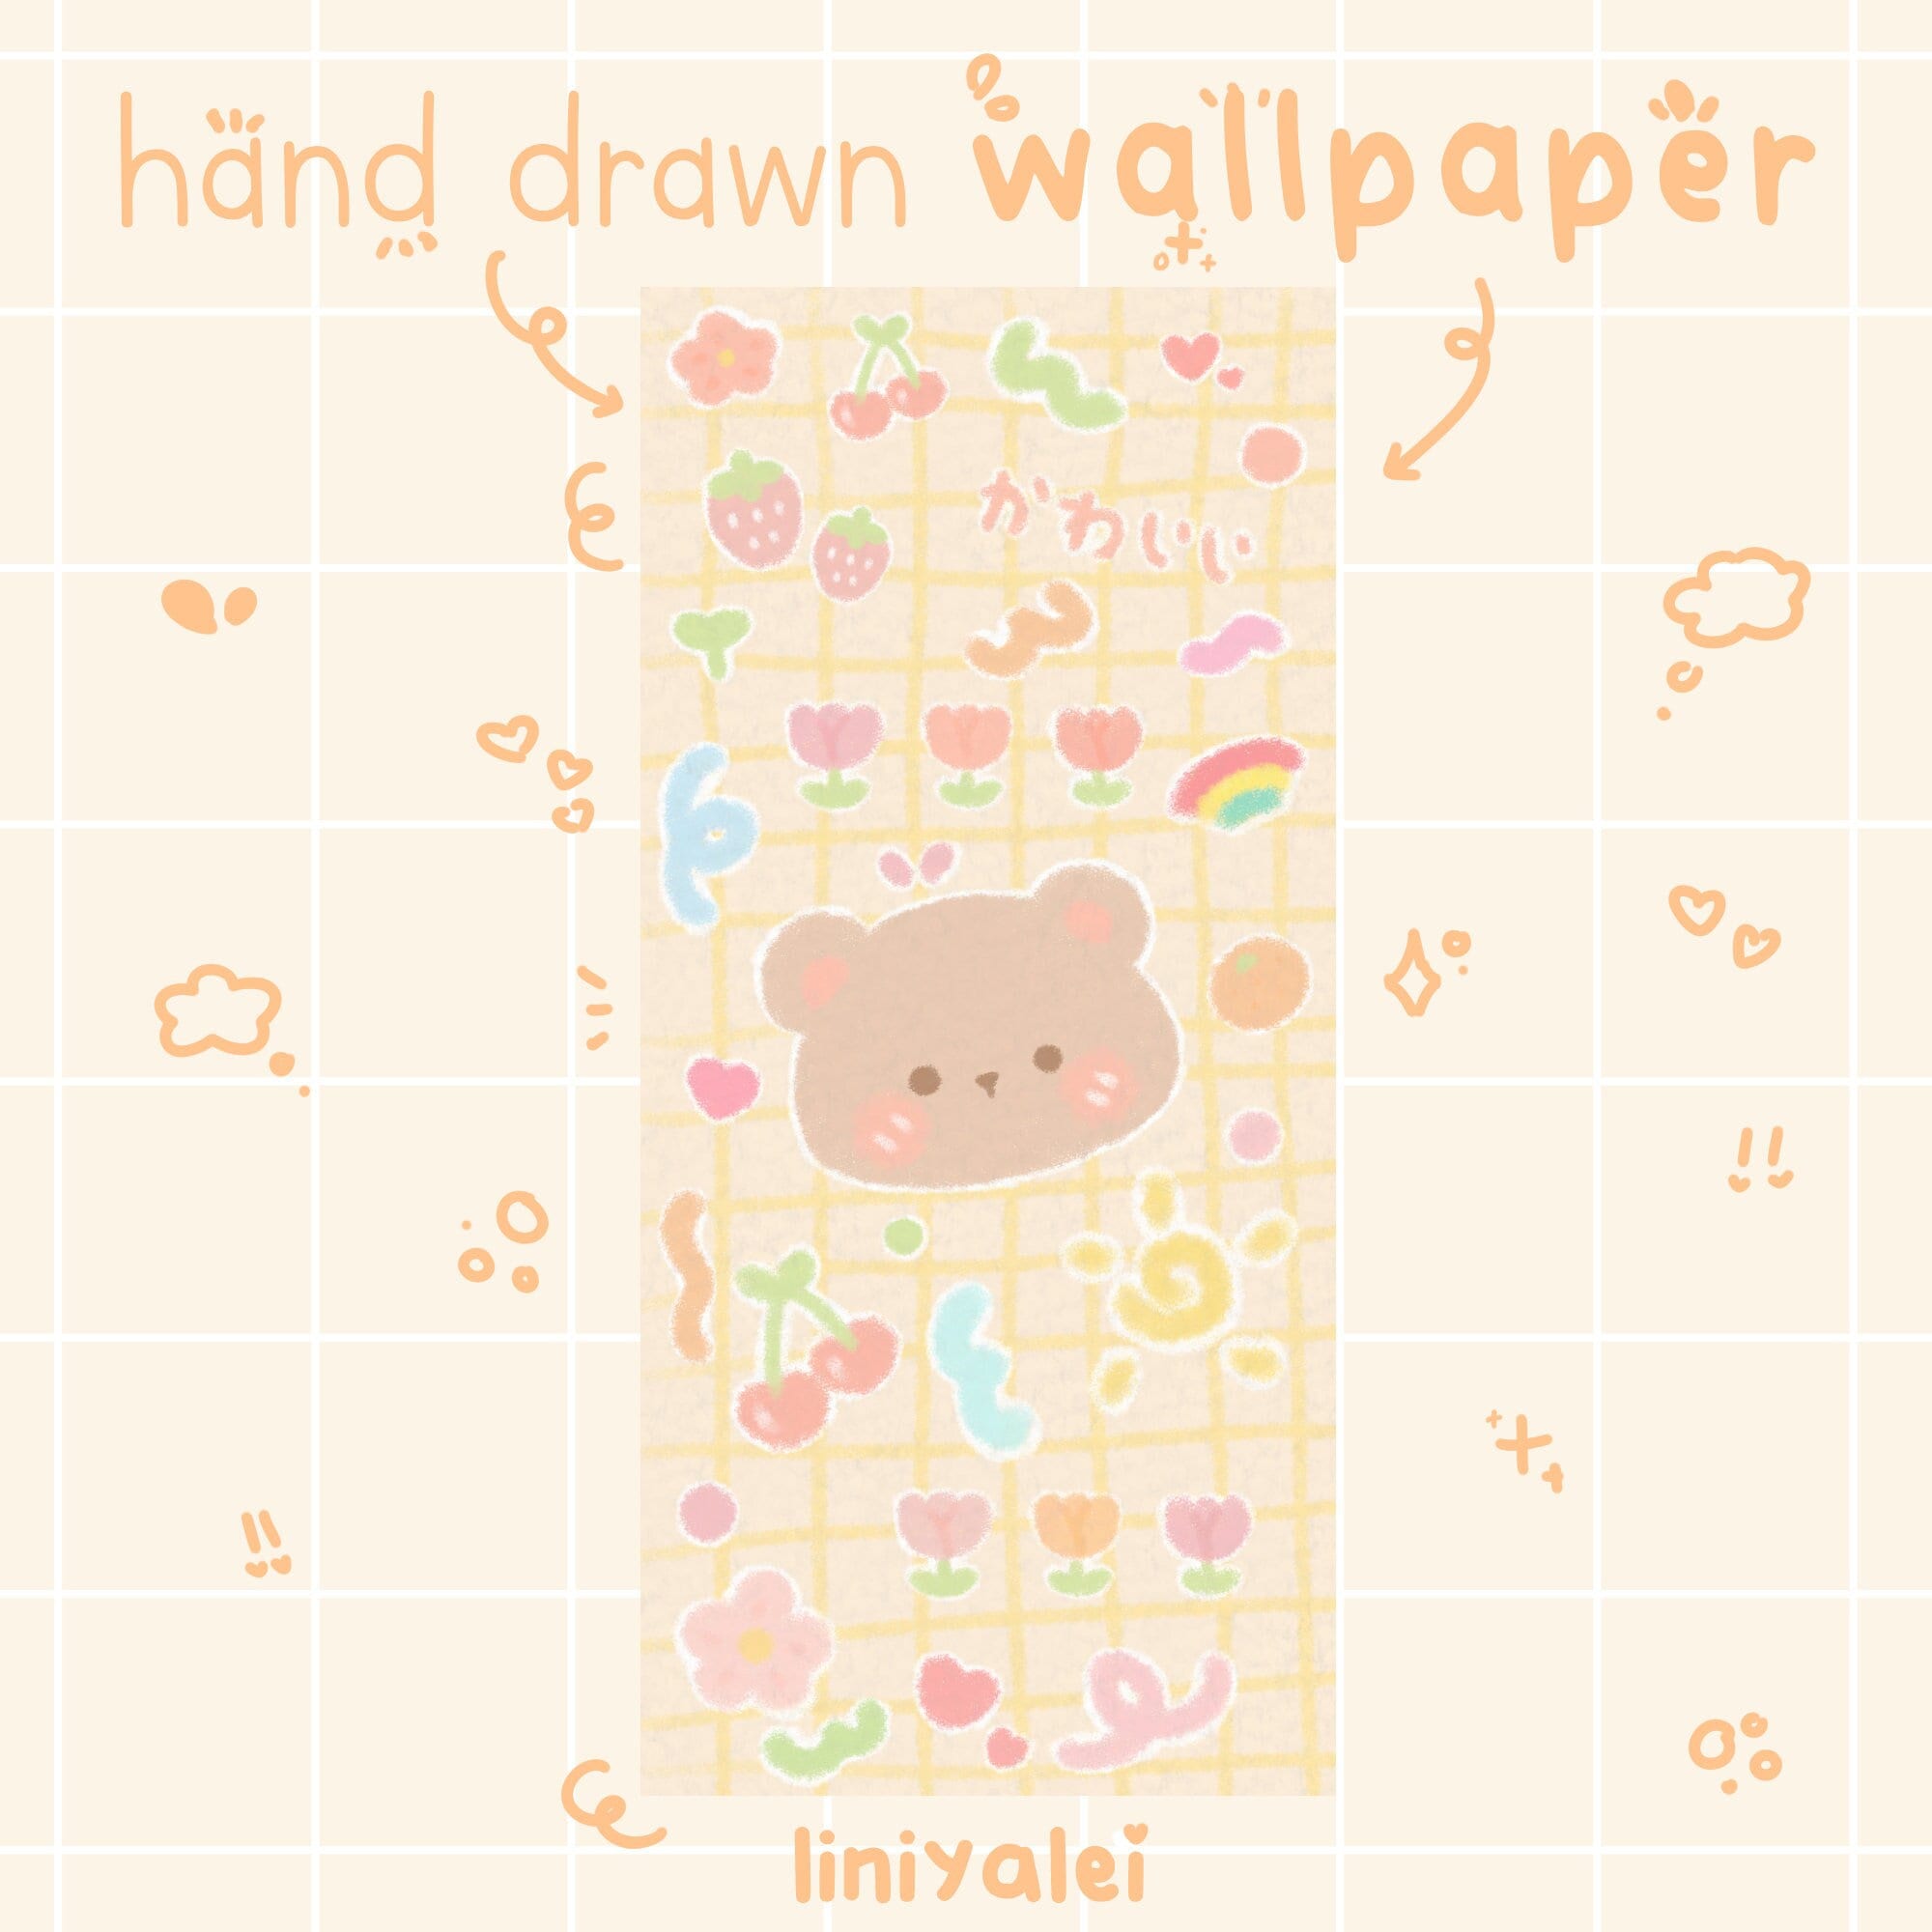 Kawaii Phone and iPhone Wallpaper / Cute Wallpaper for Phone